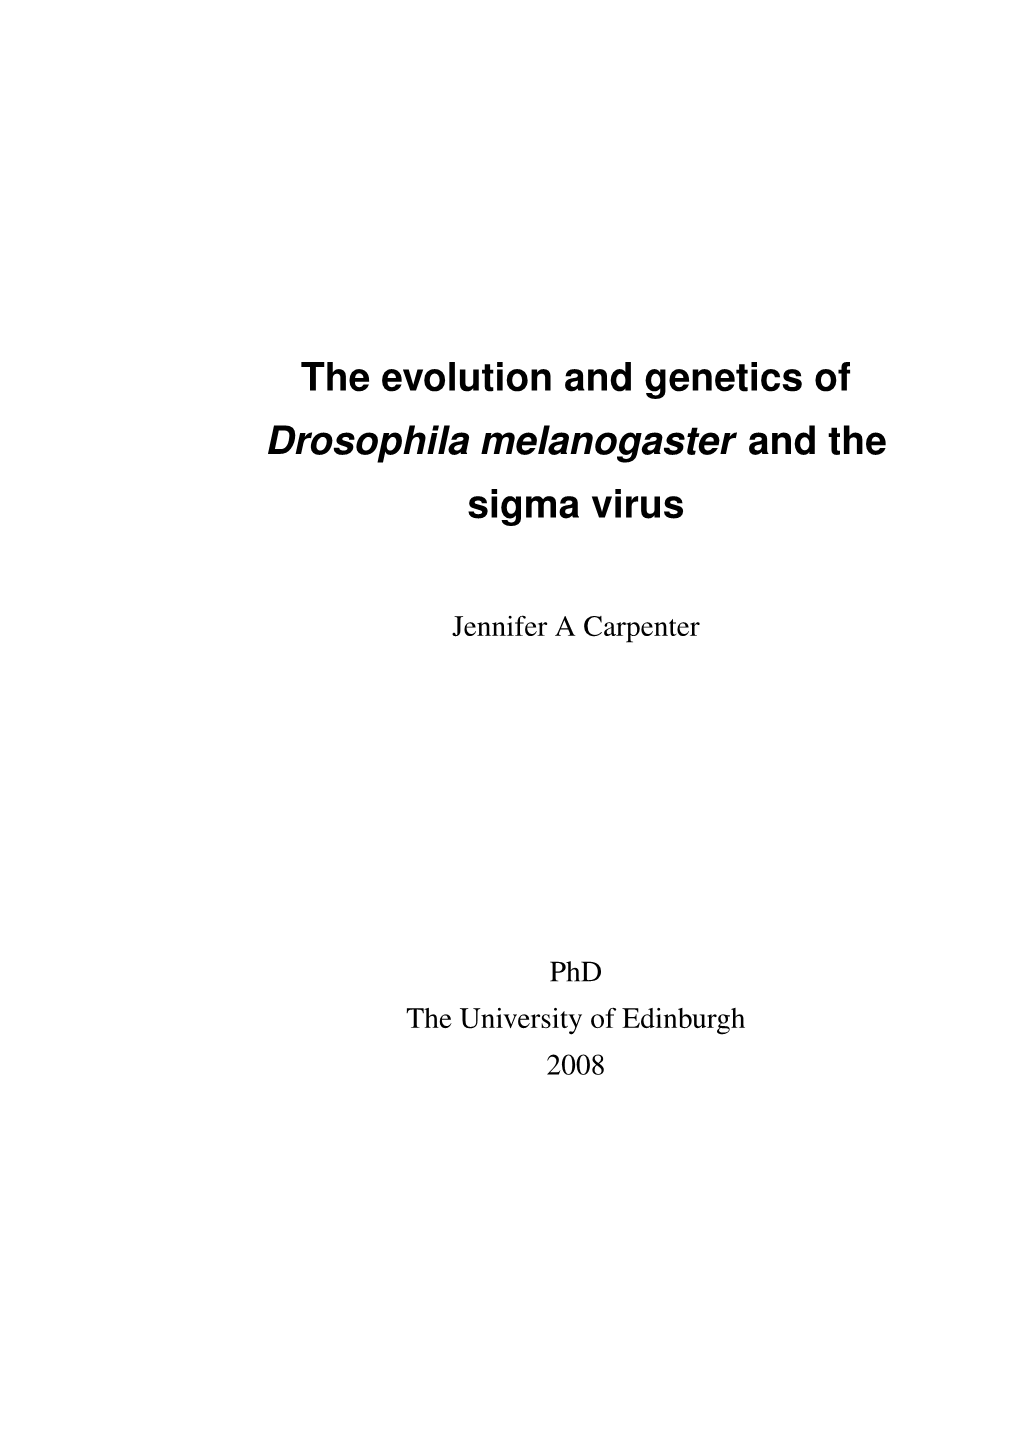 The Evolution and Genetics of Drosophila Melanogaster and the Sigma Virus